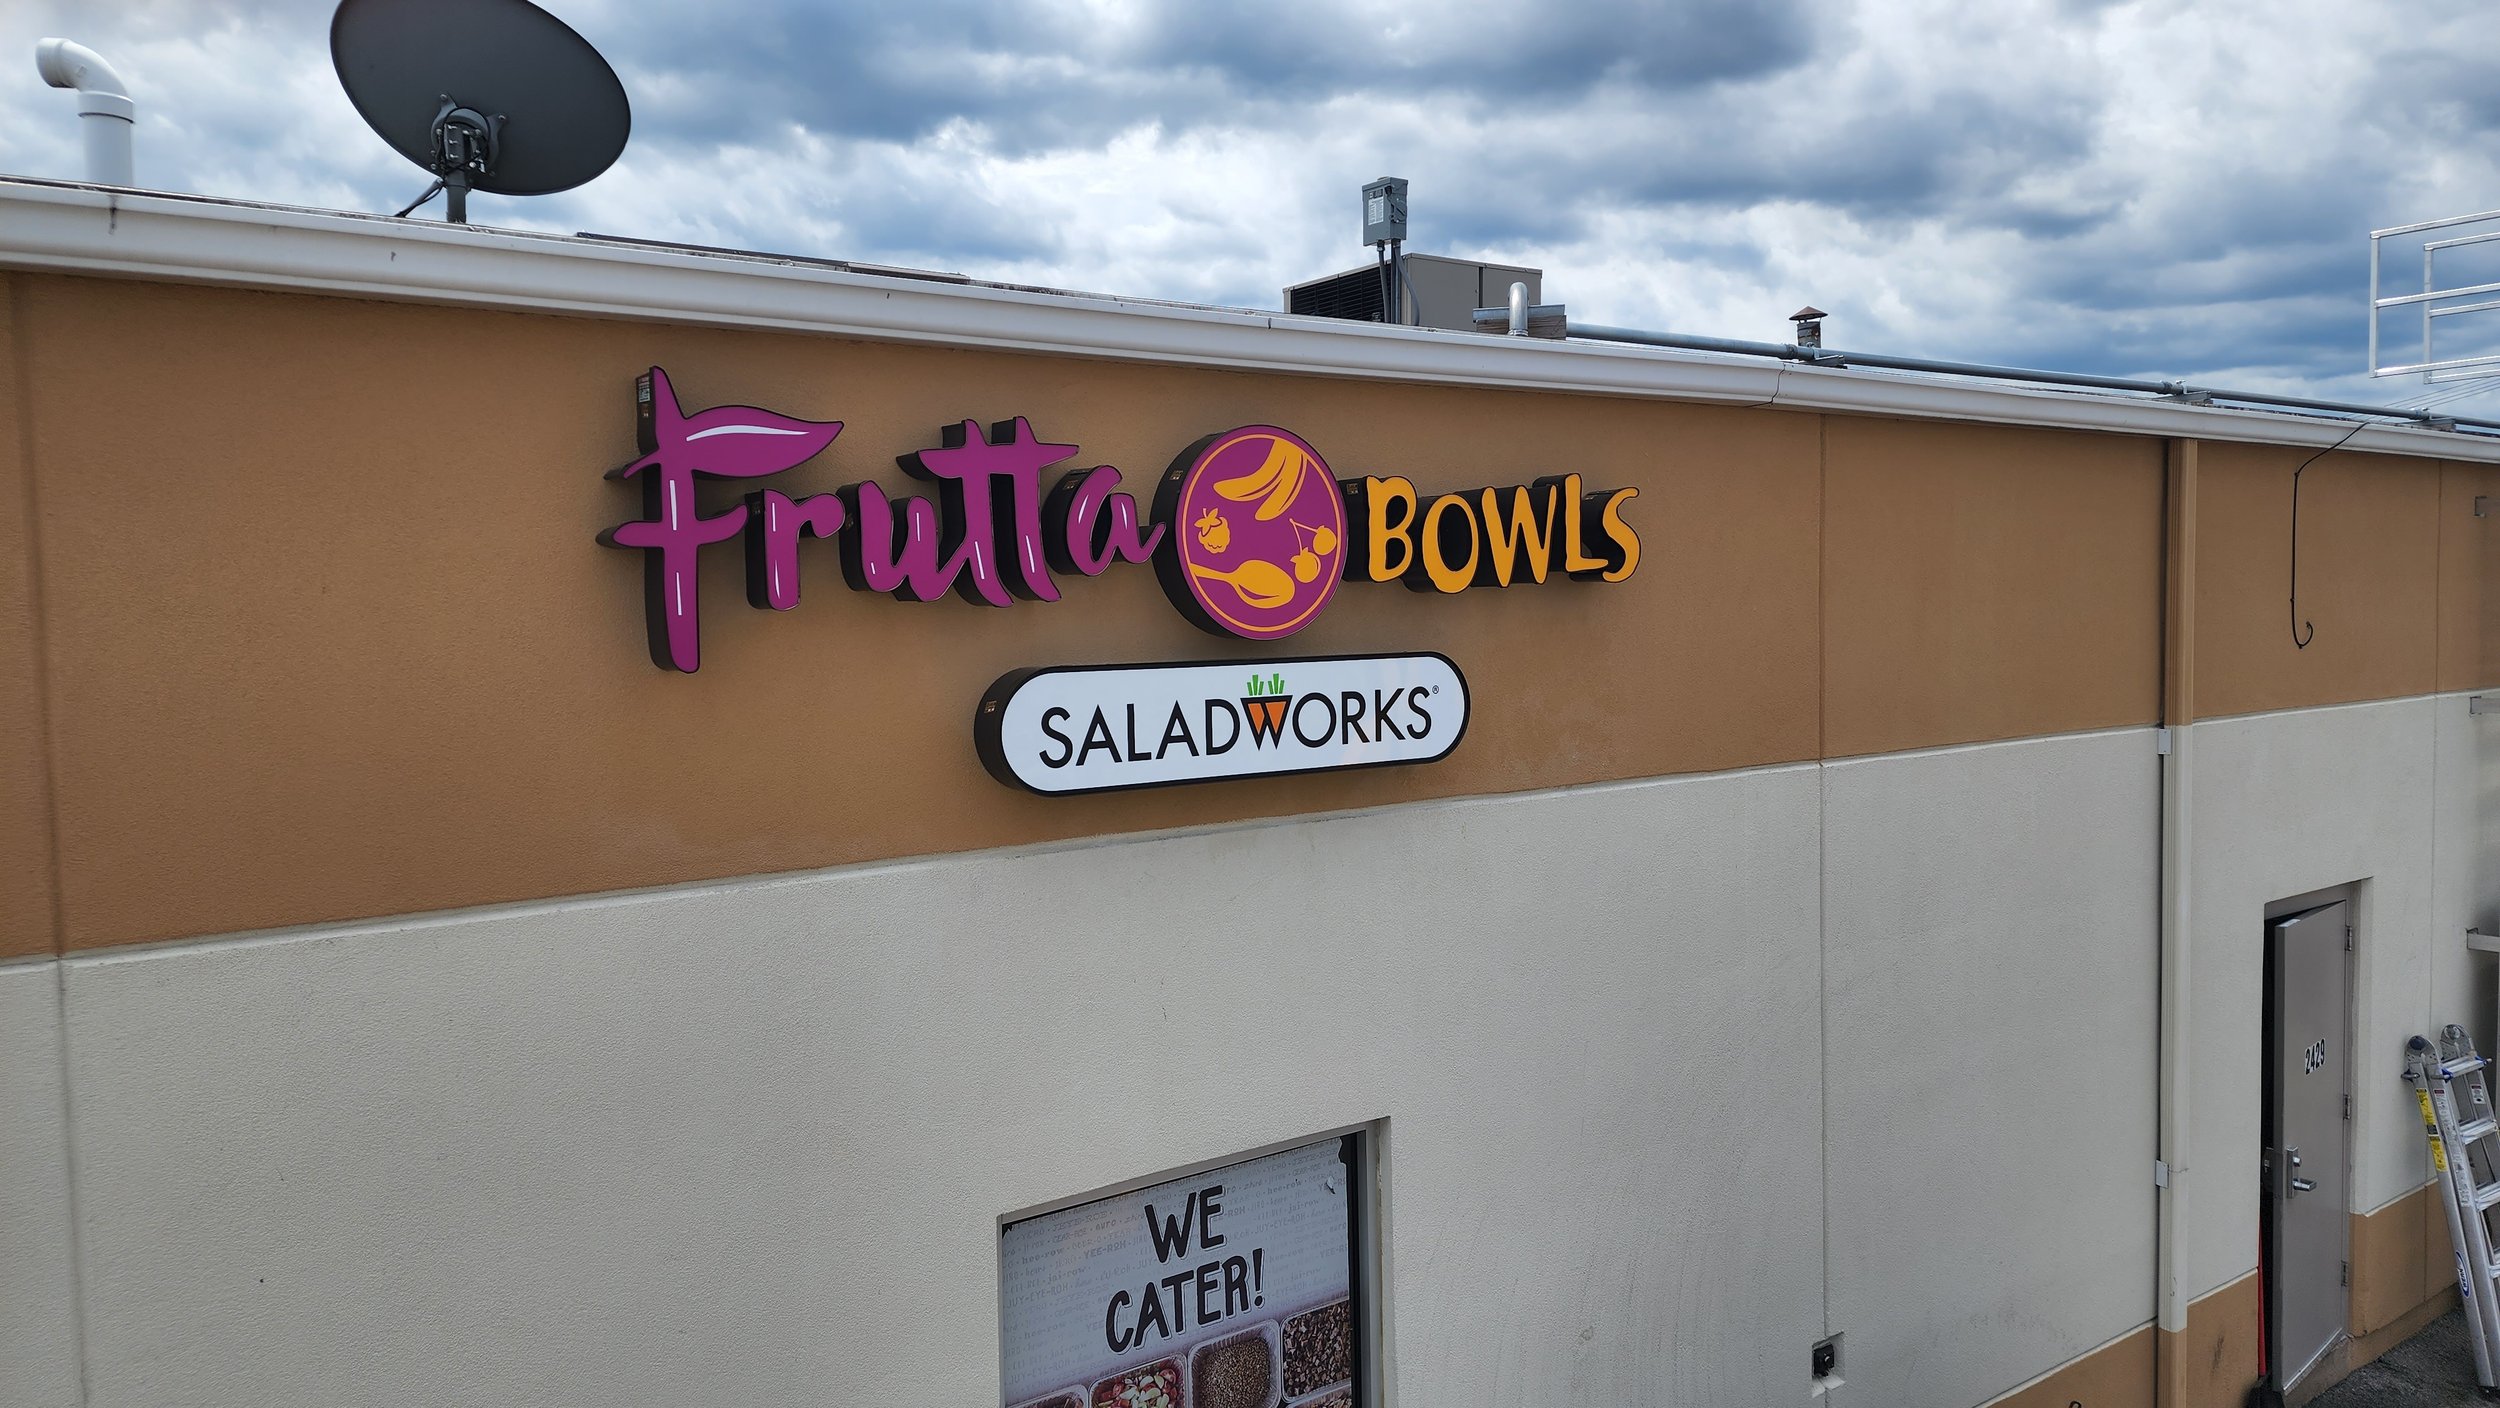 Frutta Bowl Illuminated Channel Letters